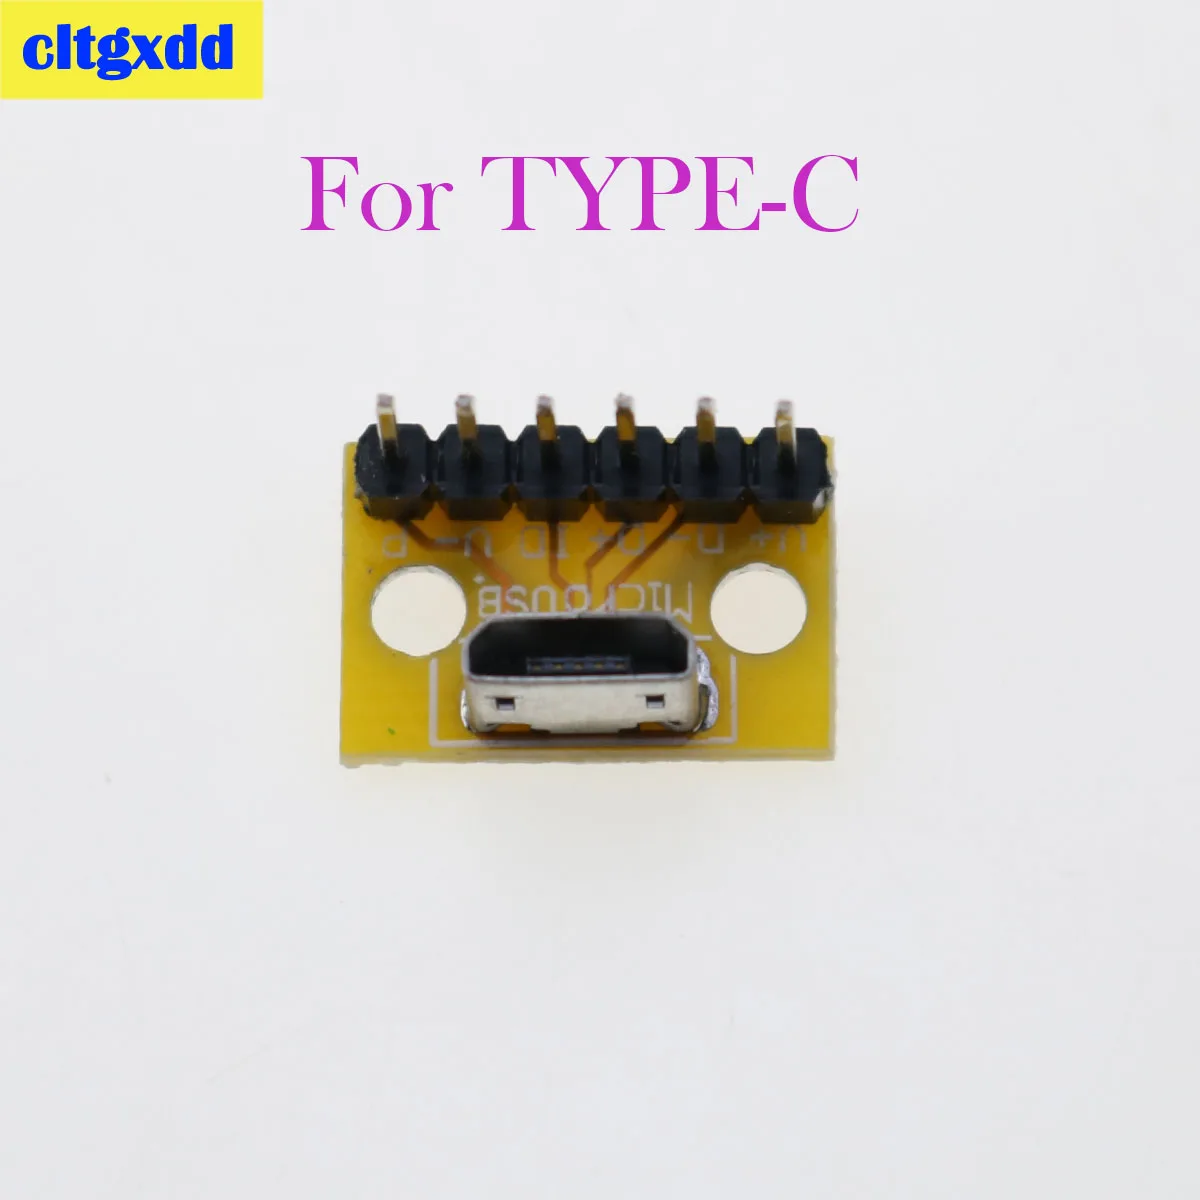 Cltgxdd 1 Uds Micro USB Vertical USB tipo C Conector de cabeza...